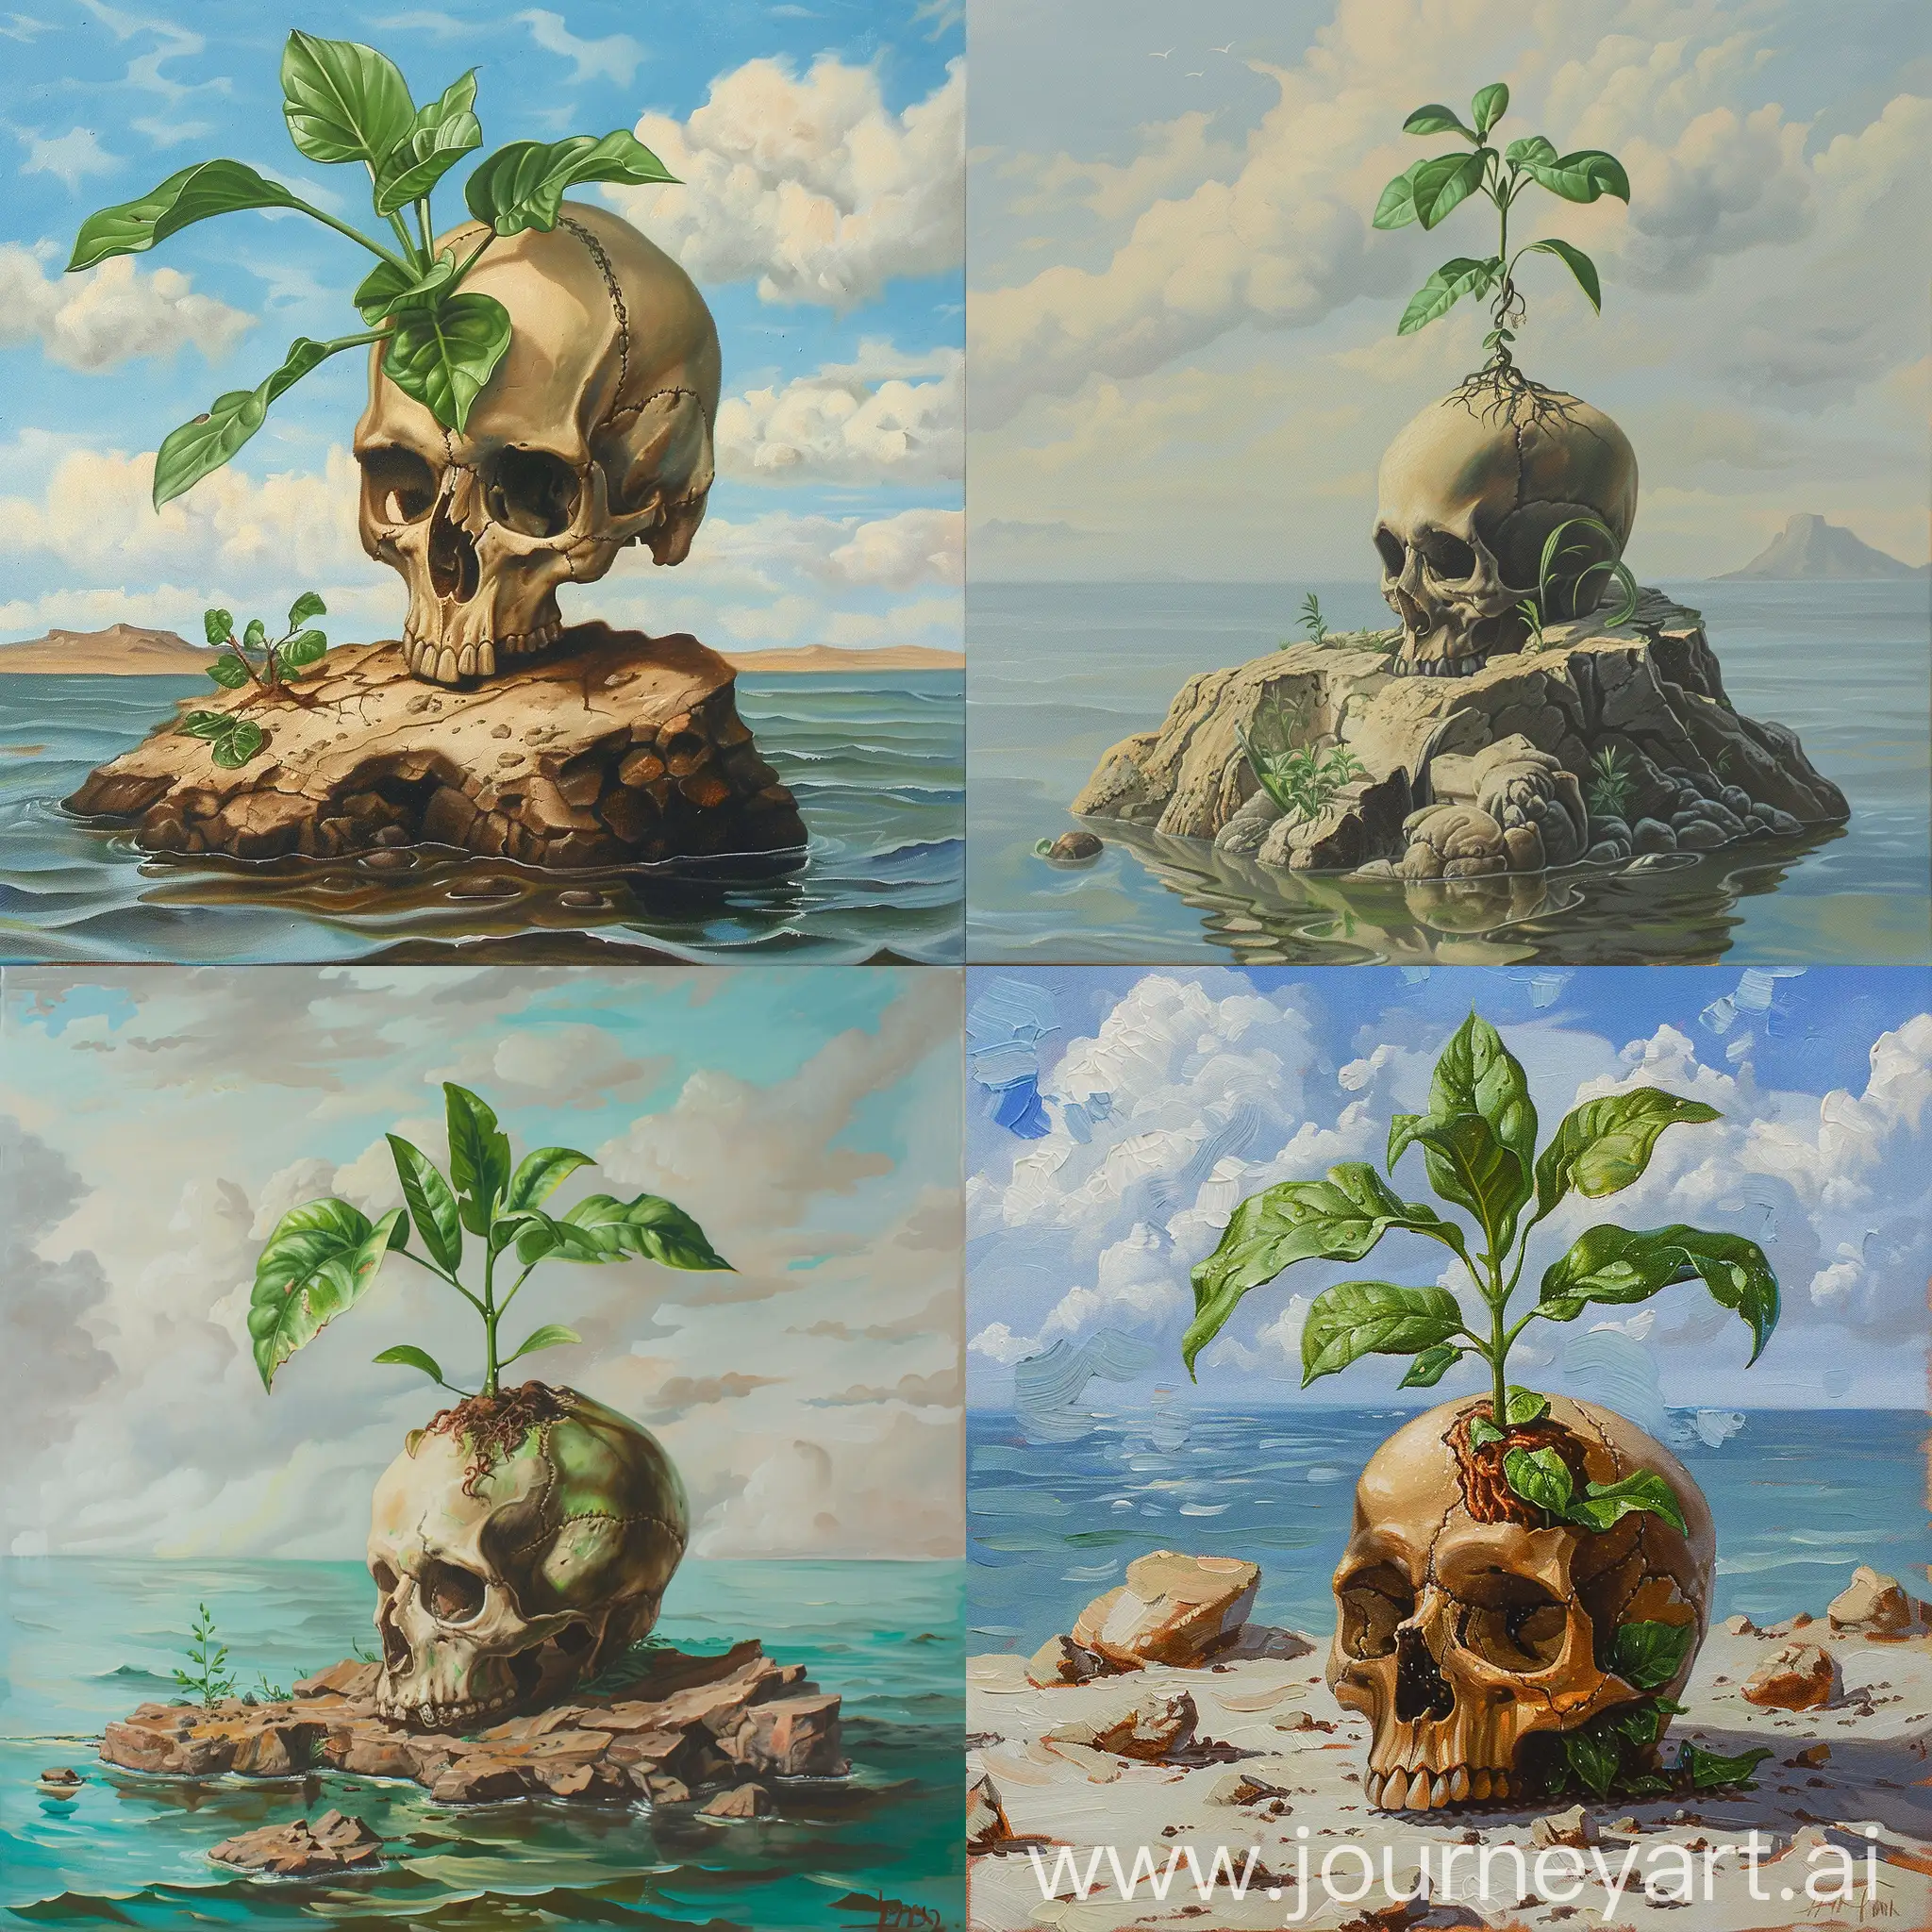 Tropical-Plant-Flourishing-Amidst-Human-Skull-on-Deserted-Isle